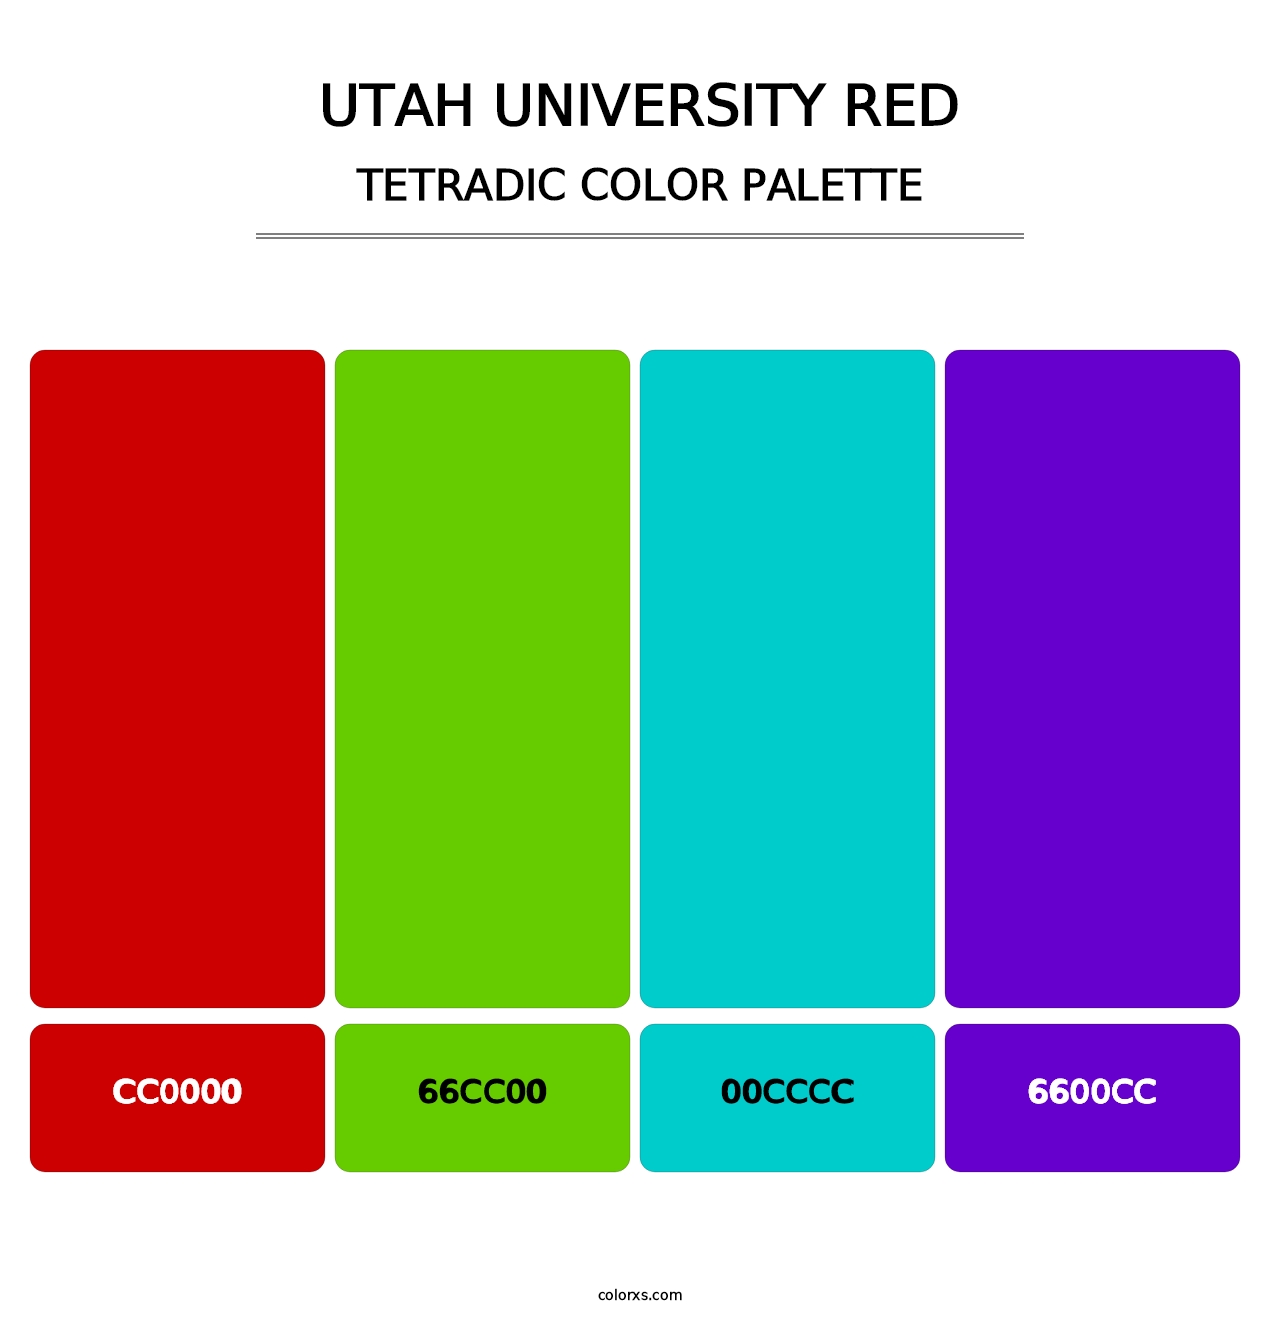 Utah University Red - Tetradic Color Palette